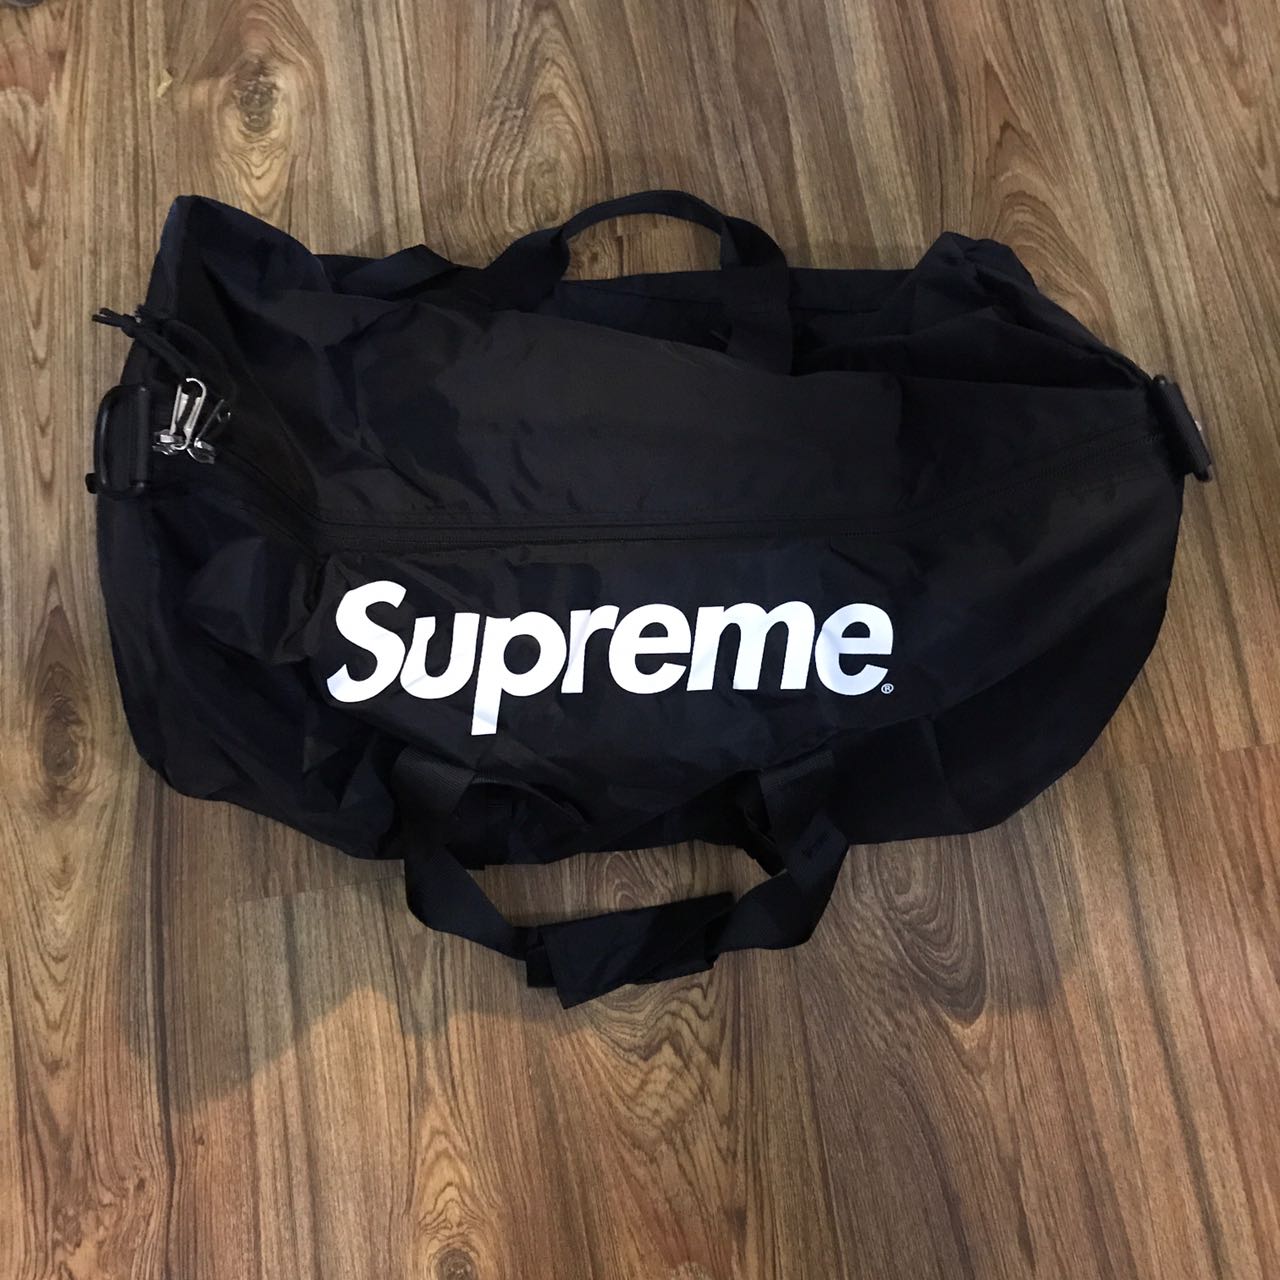 Supreme Big Duffle Bag - Large